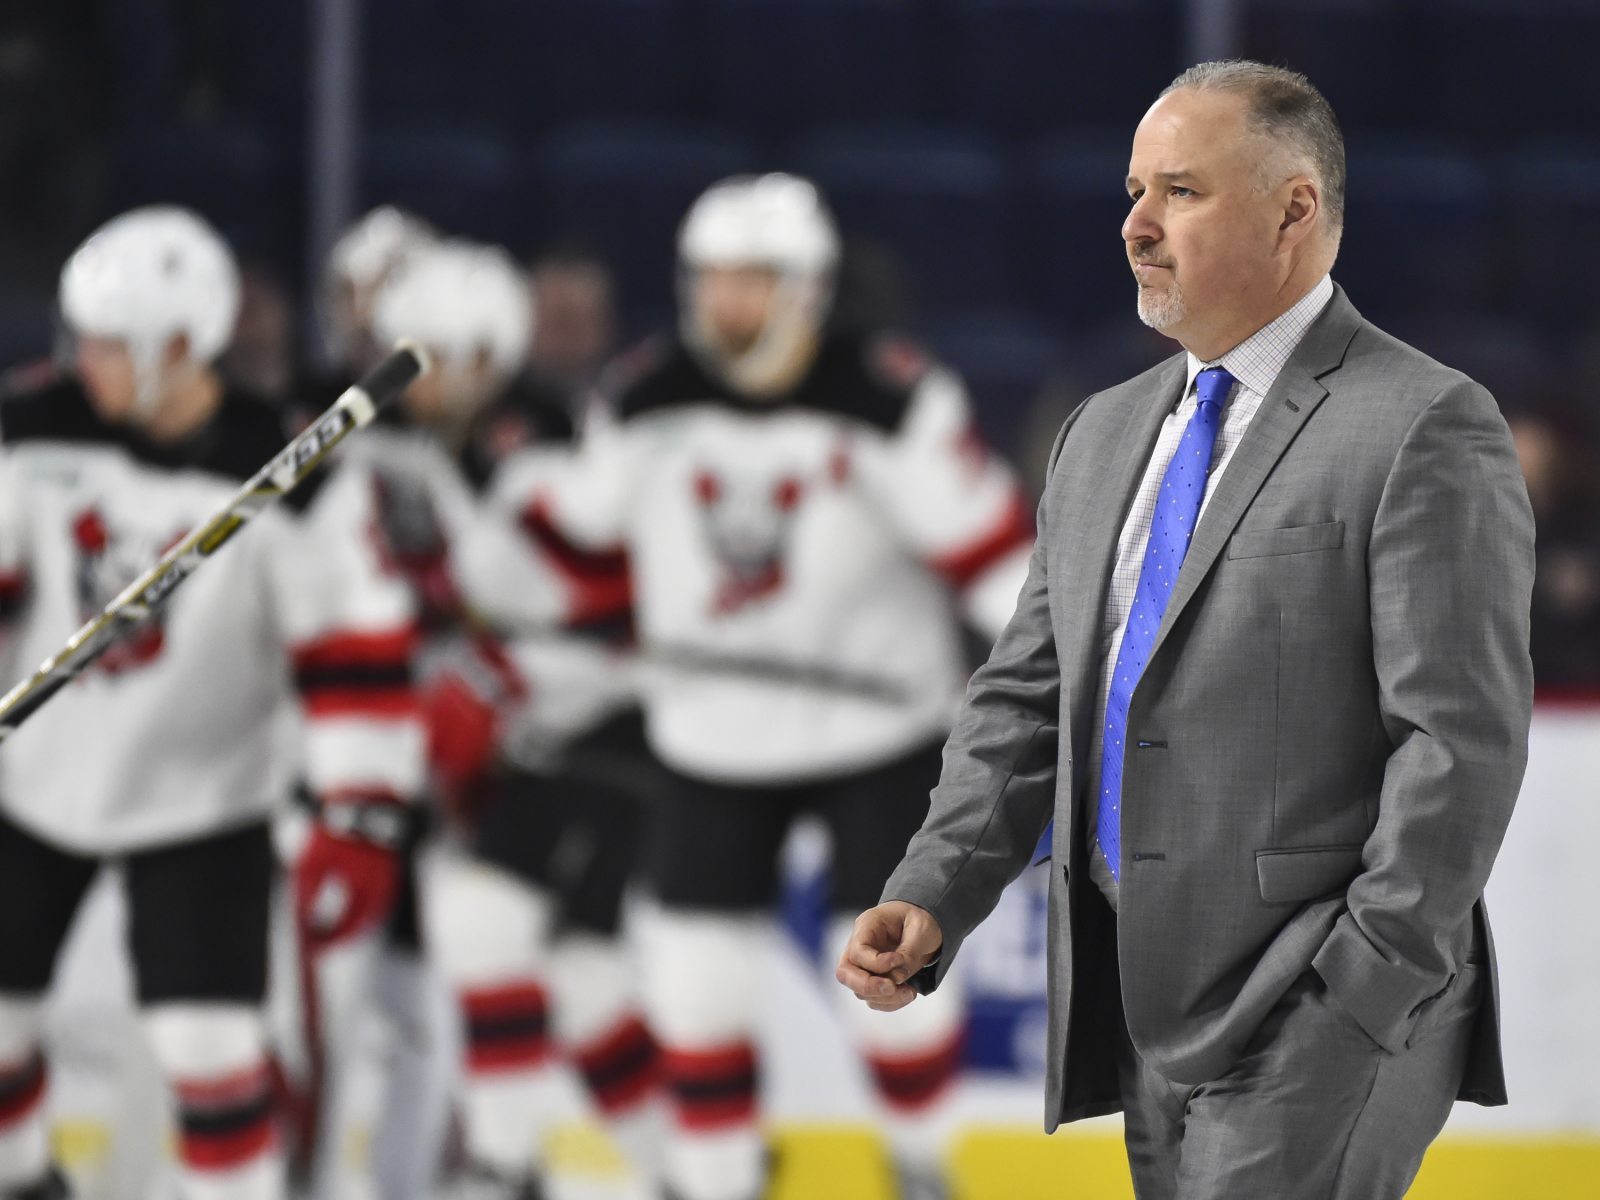 Binghamton Devils will cease to exist effective the 2021-22 AHL season